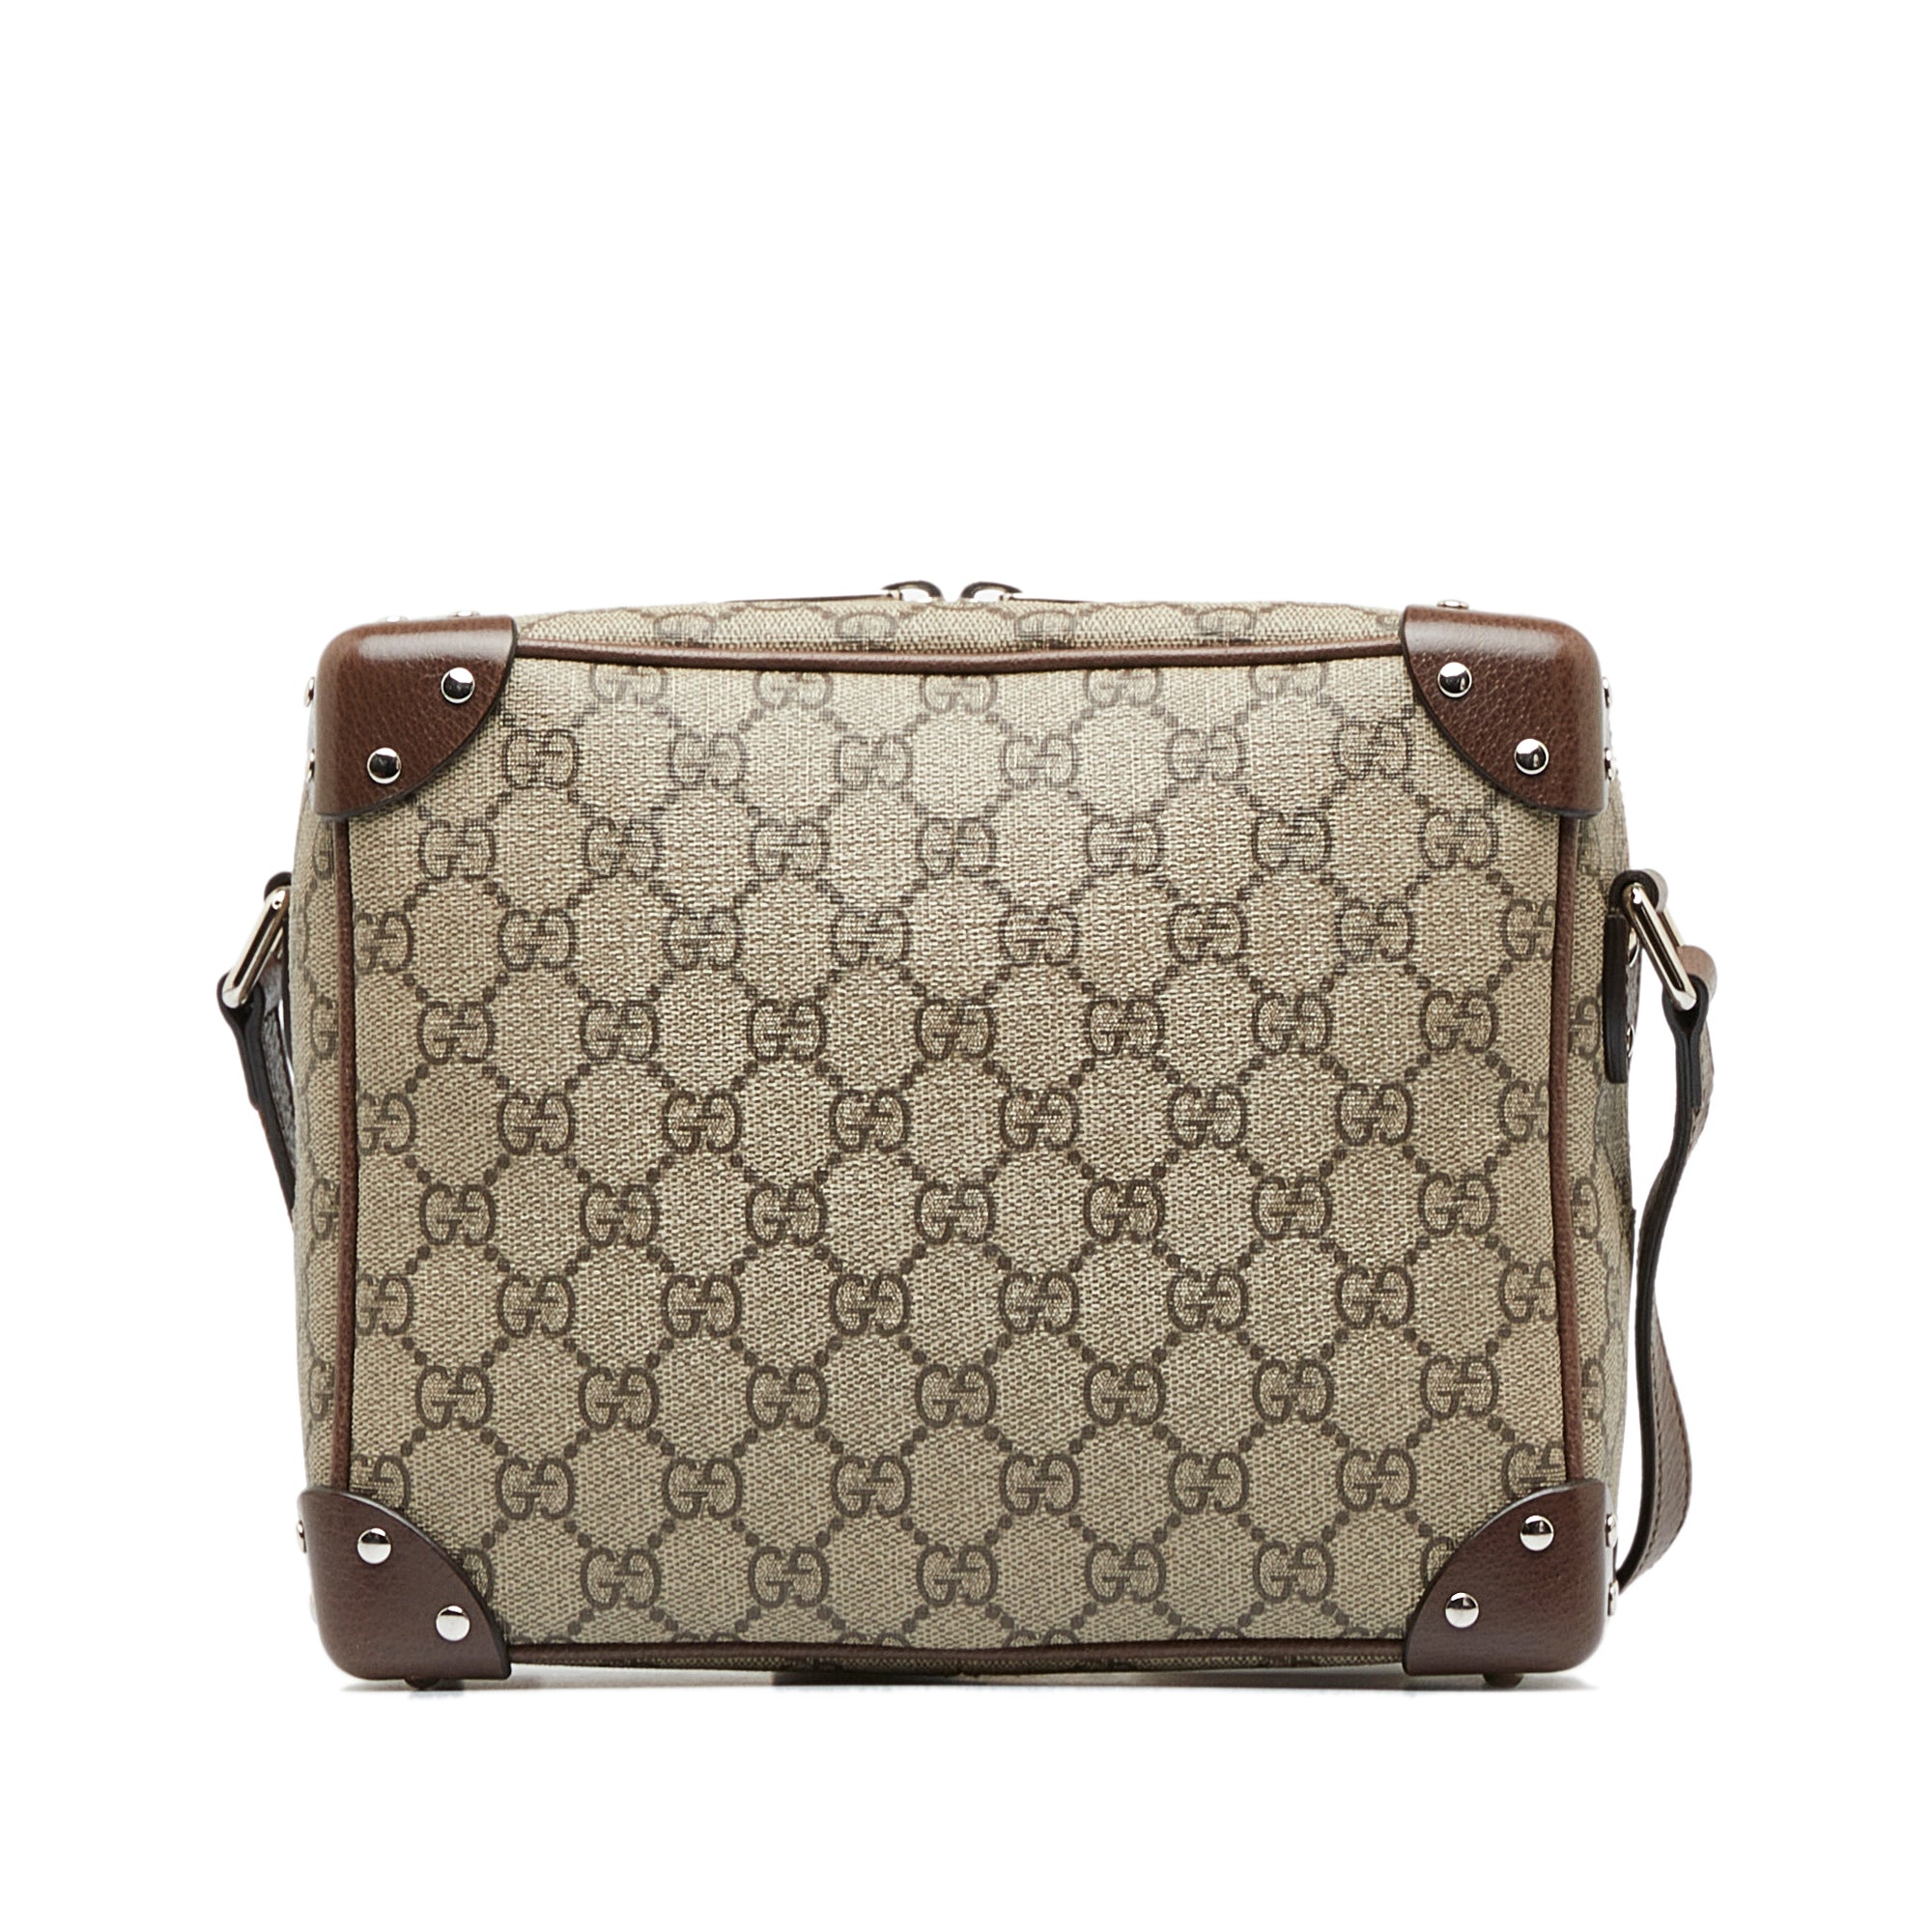 NEW*** Gucci, Armani, and Louis Vuitton/Supreme CAPS for Sale in